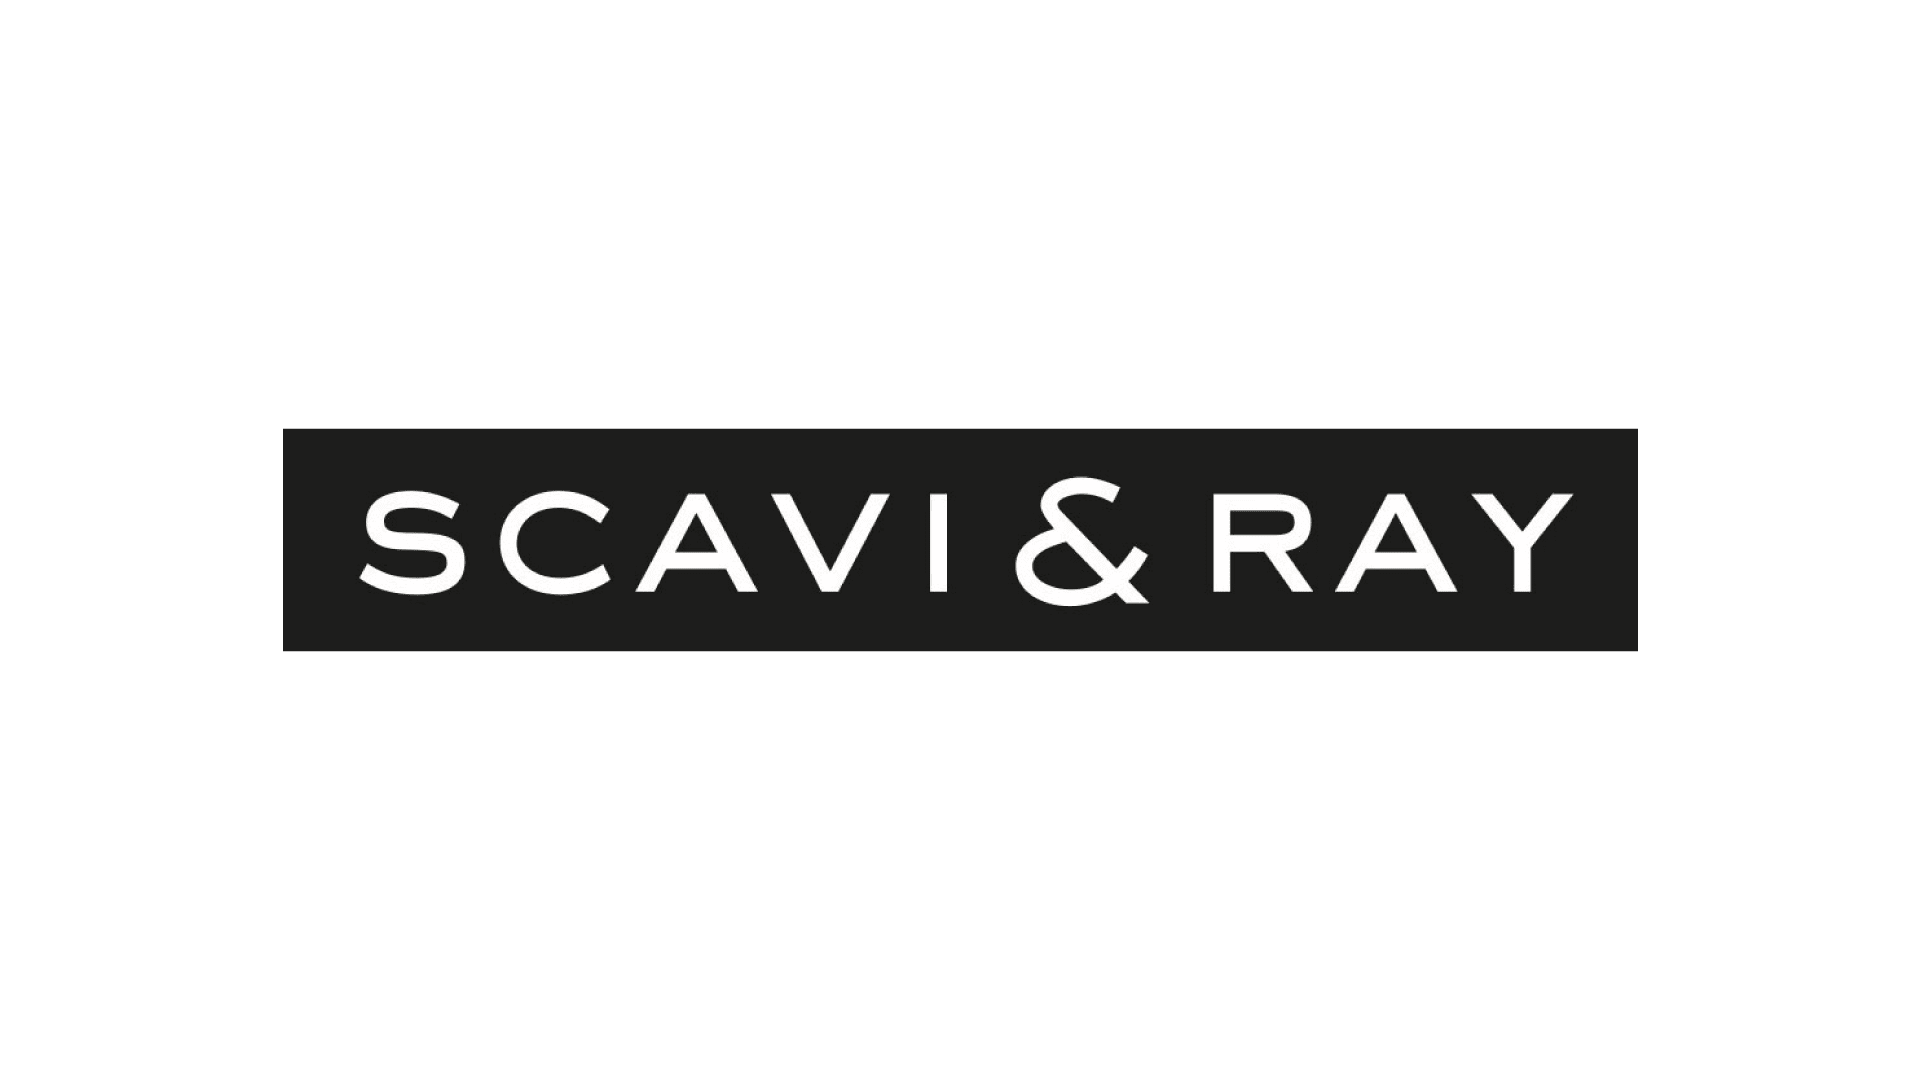 Skavi & Ray work with CADS' Retail Design Agency Prosper